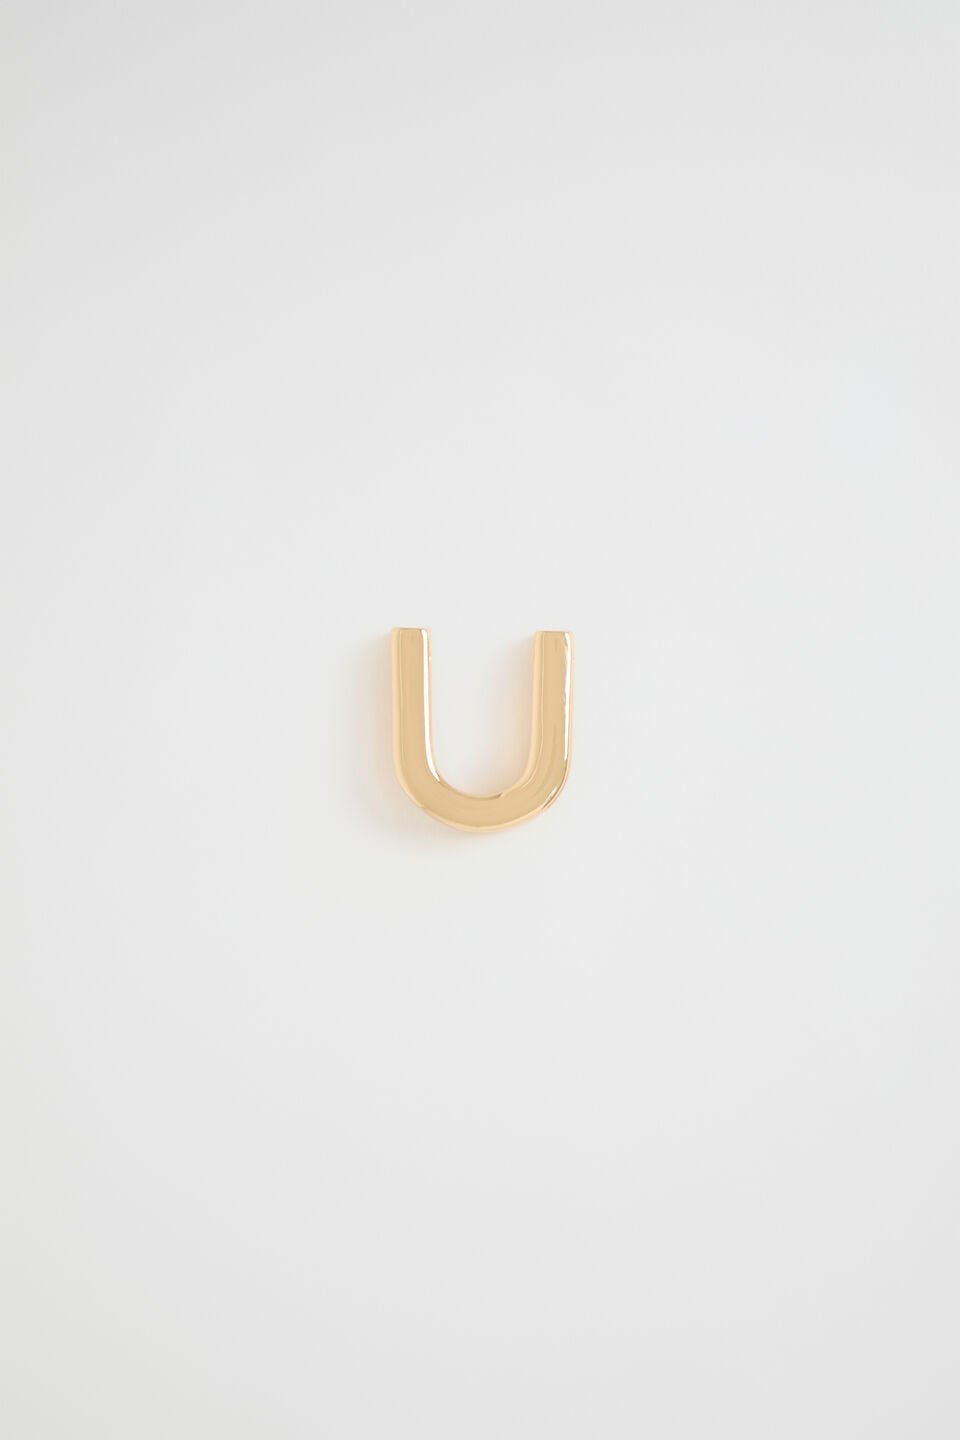 Letters  U